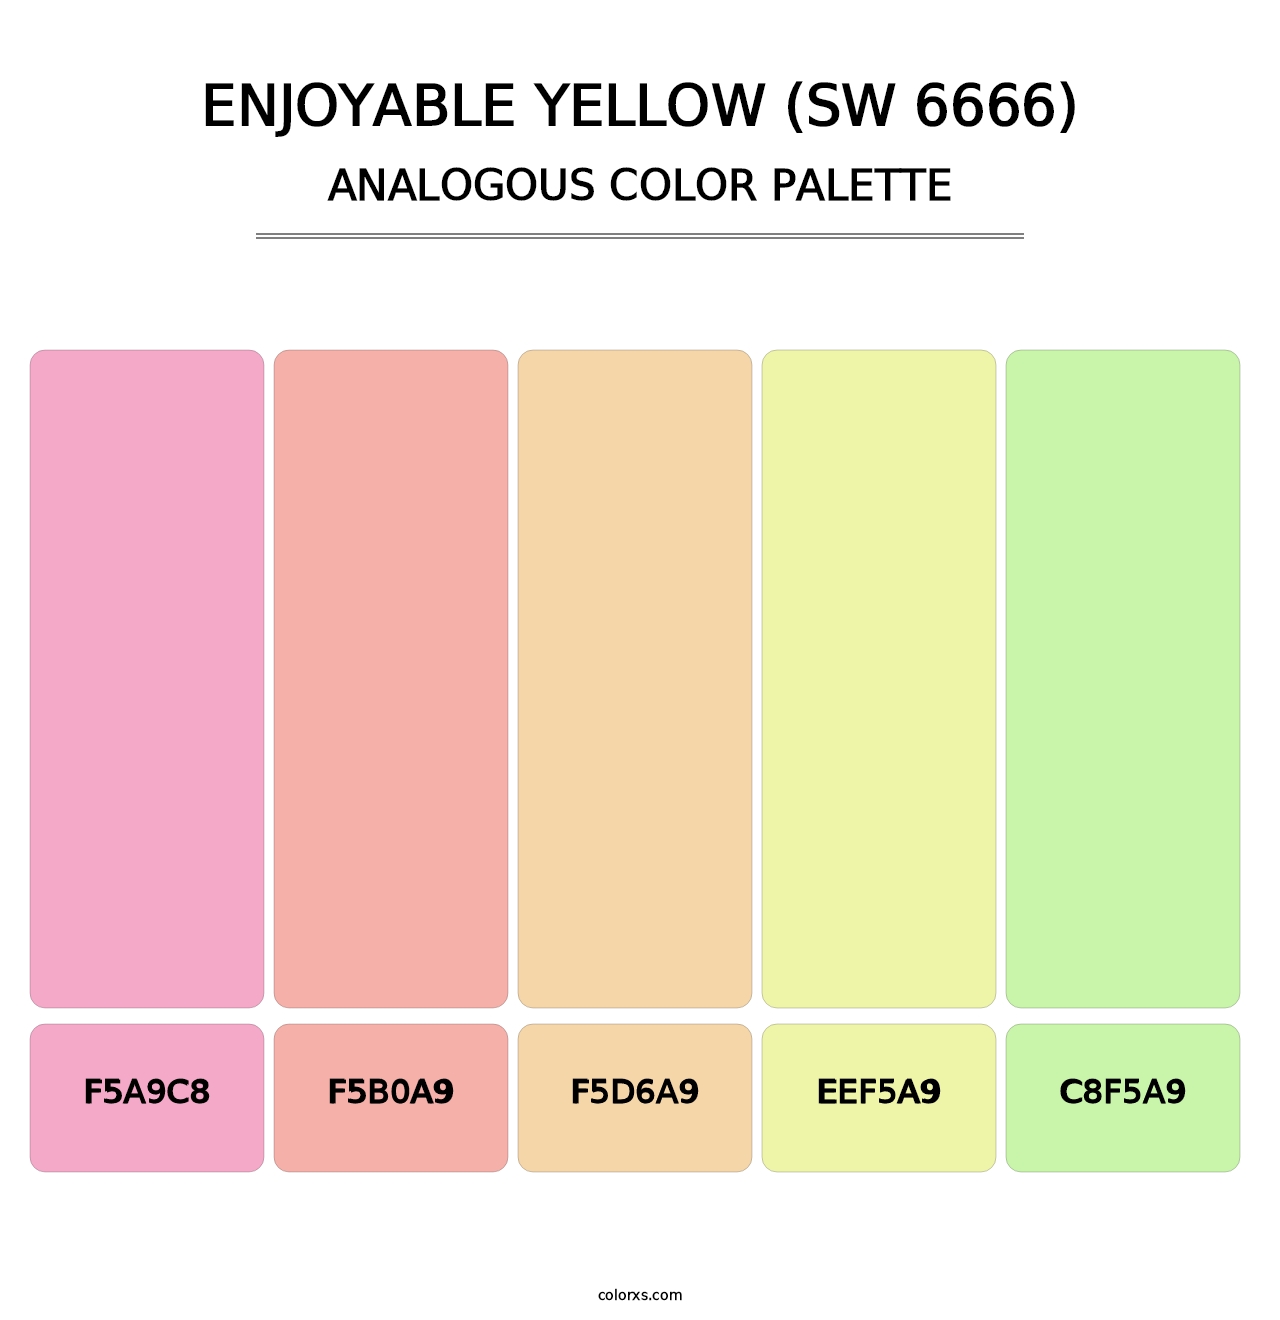 Enjoyable Yellow (SW 6666) - Analogous Color Palette